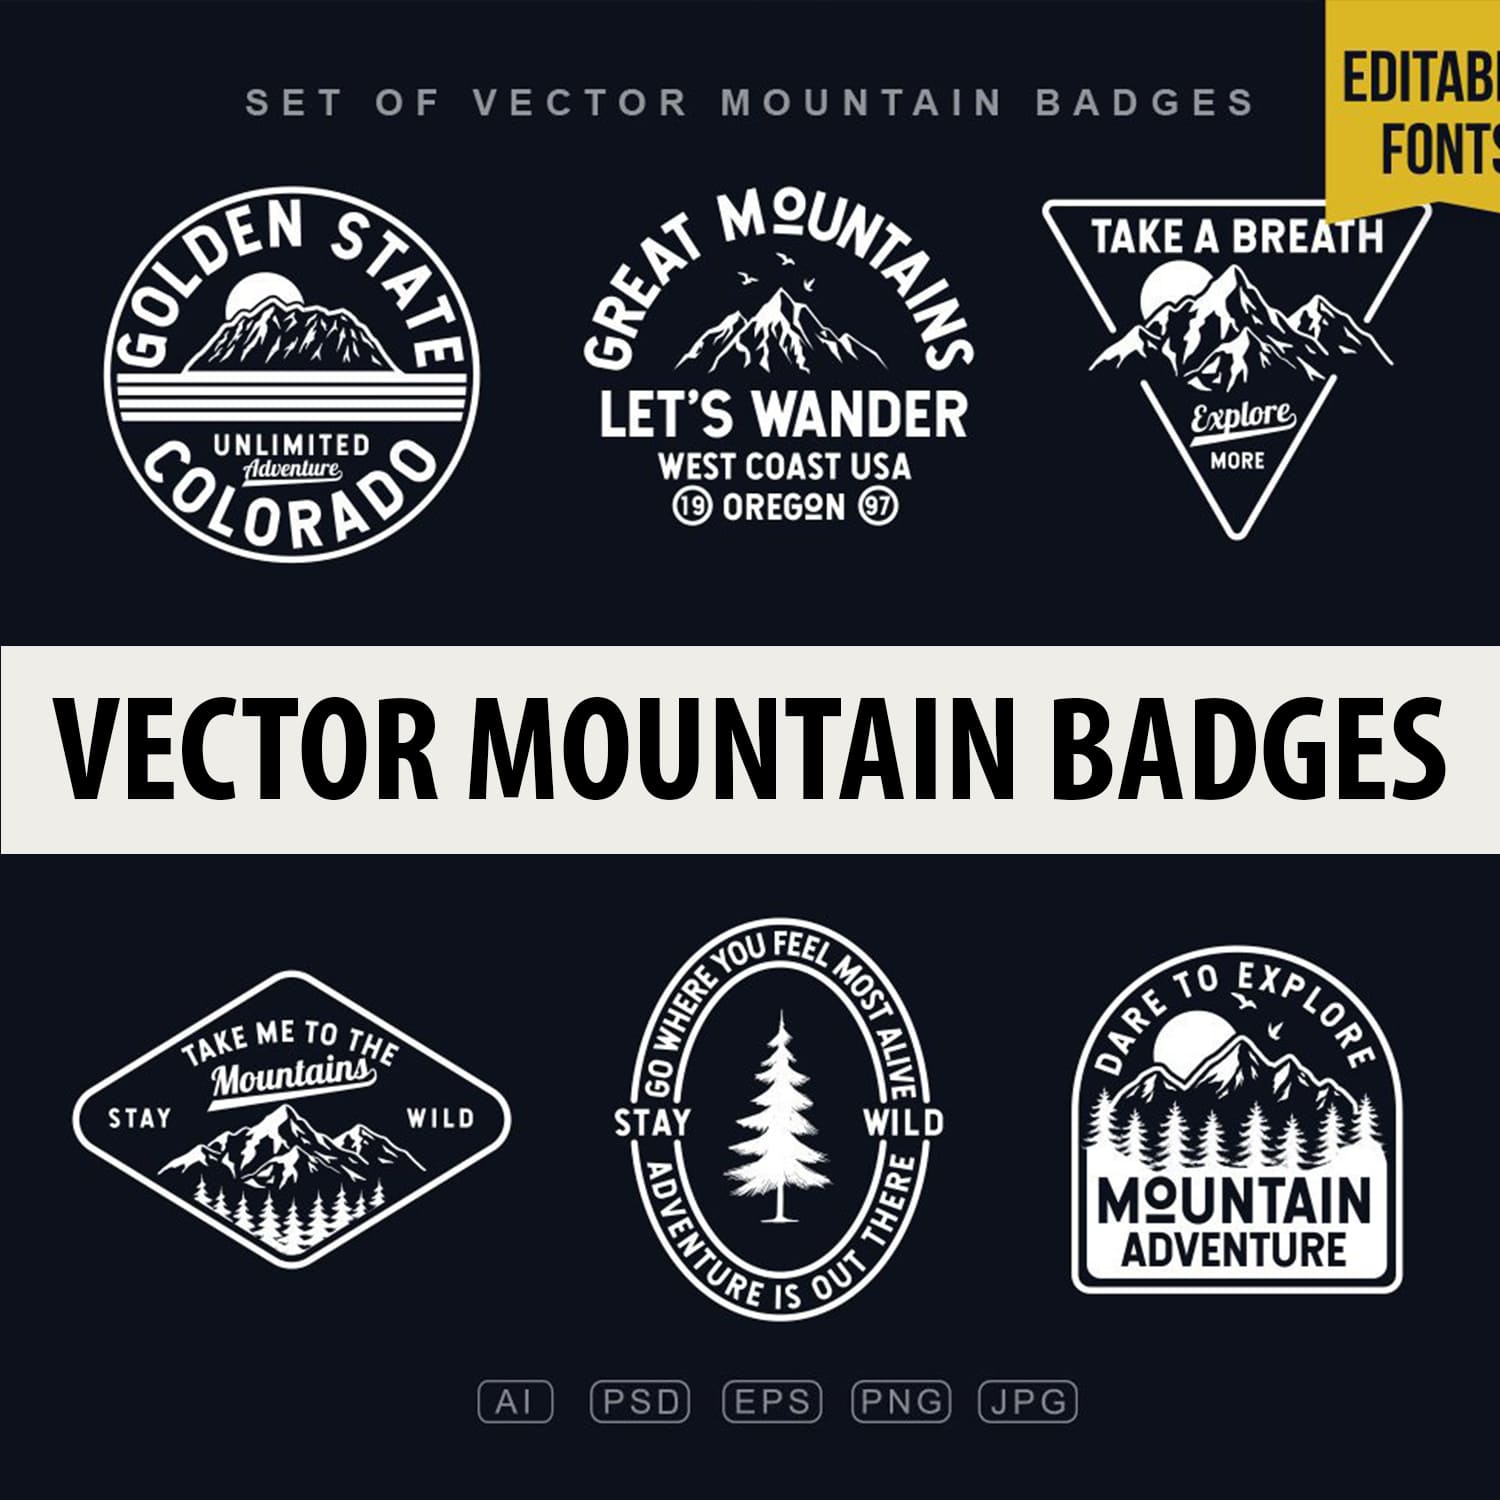 Vector Mountain Badges main cover.